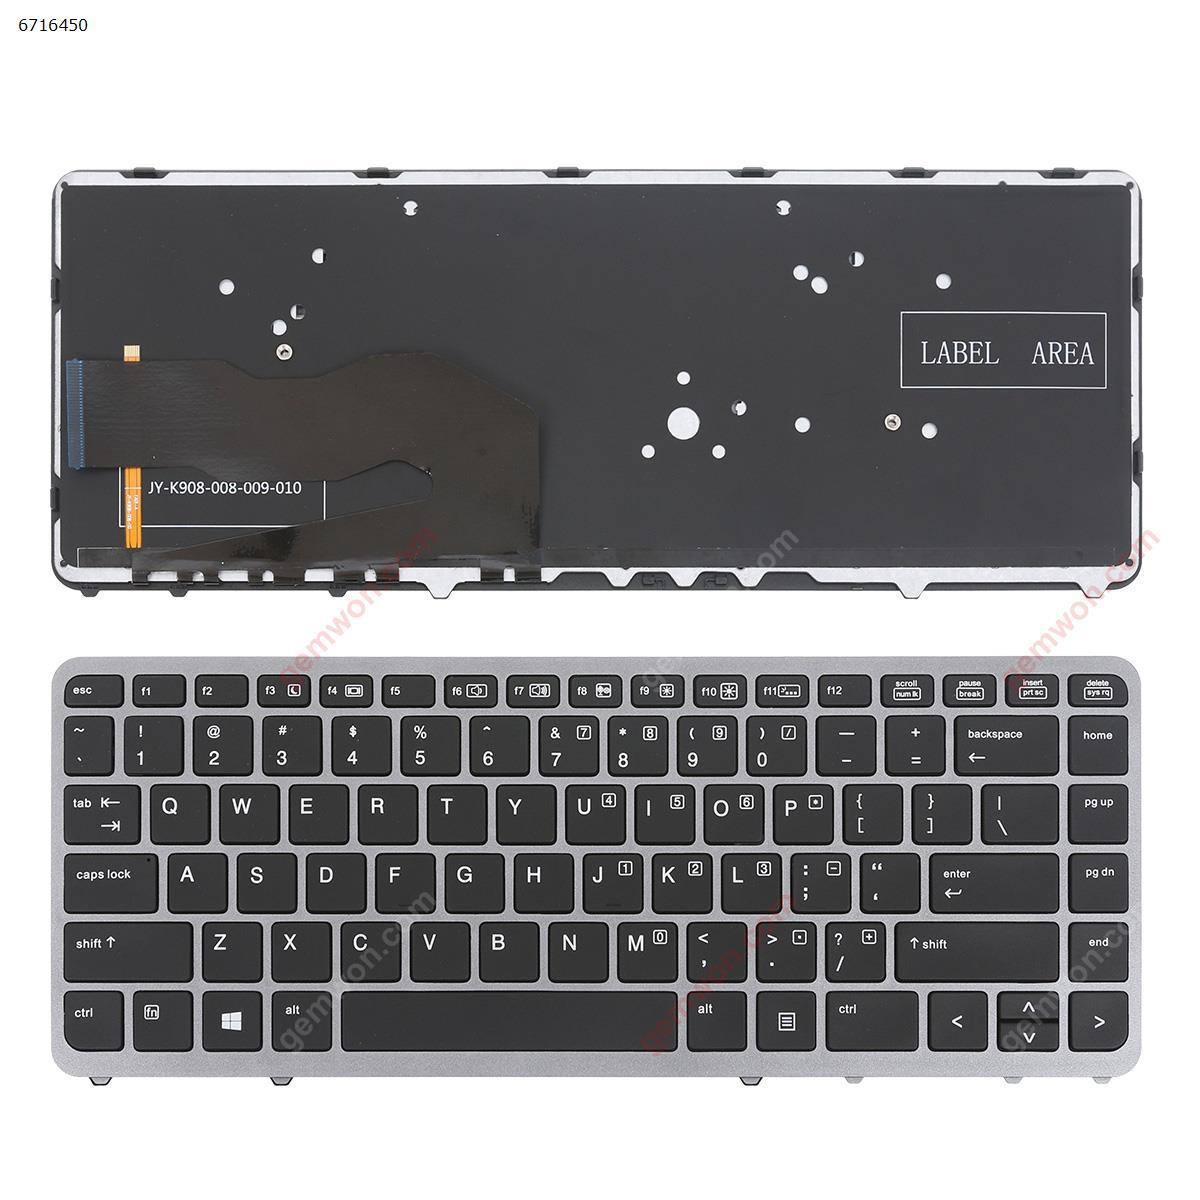 HP EliteBook 840 G1 850 G1 GRAY  FRAME BLACK (without  point,Backlit,Win8) US JY-K908-008-009-010 Laptop Keyboard (A+)